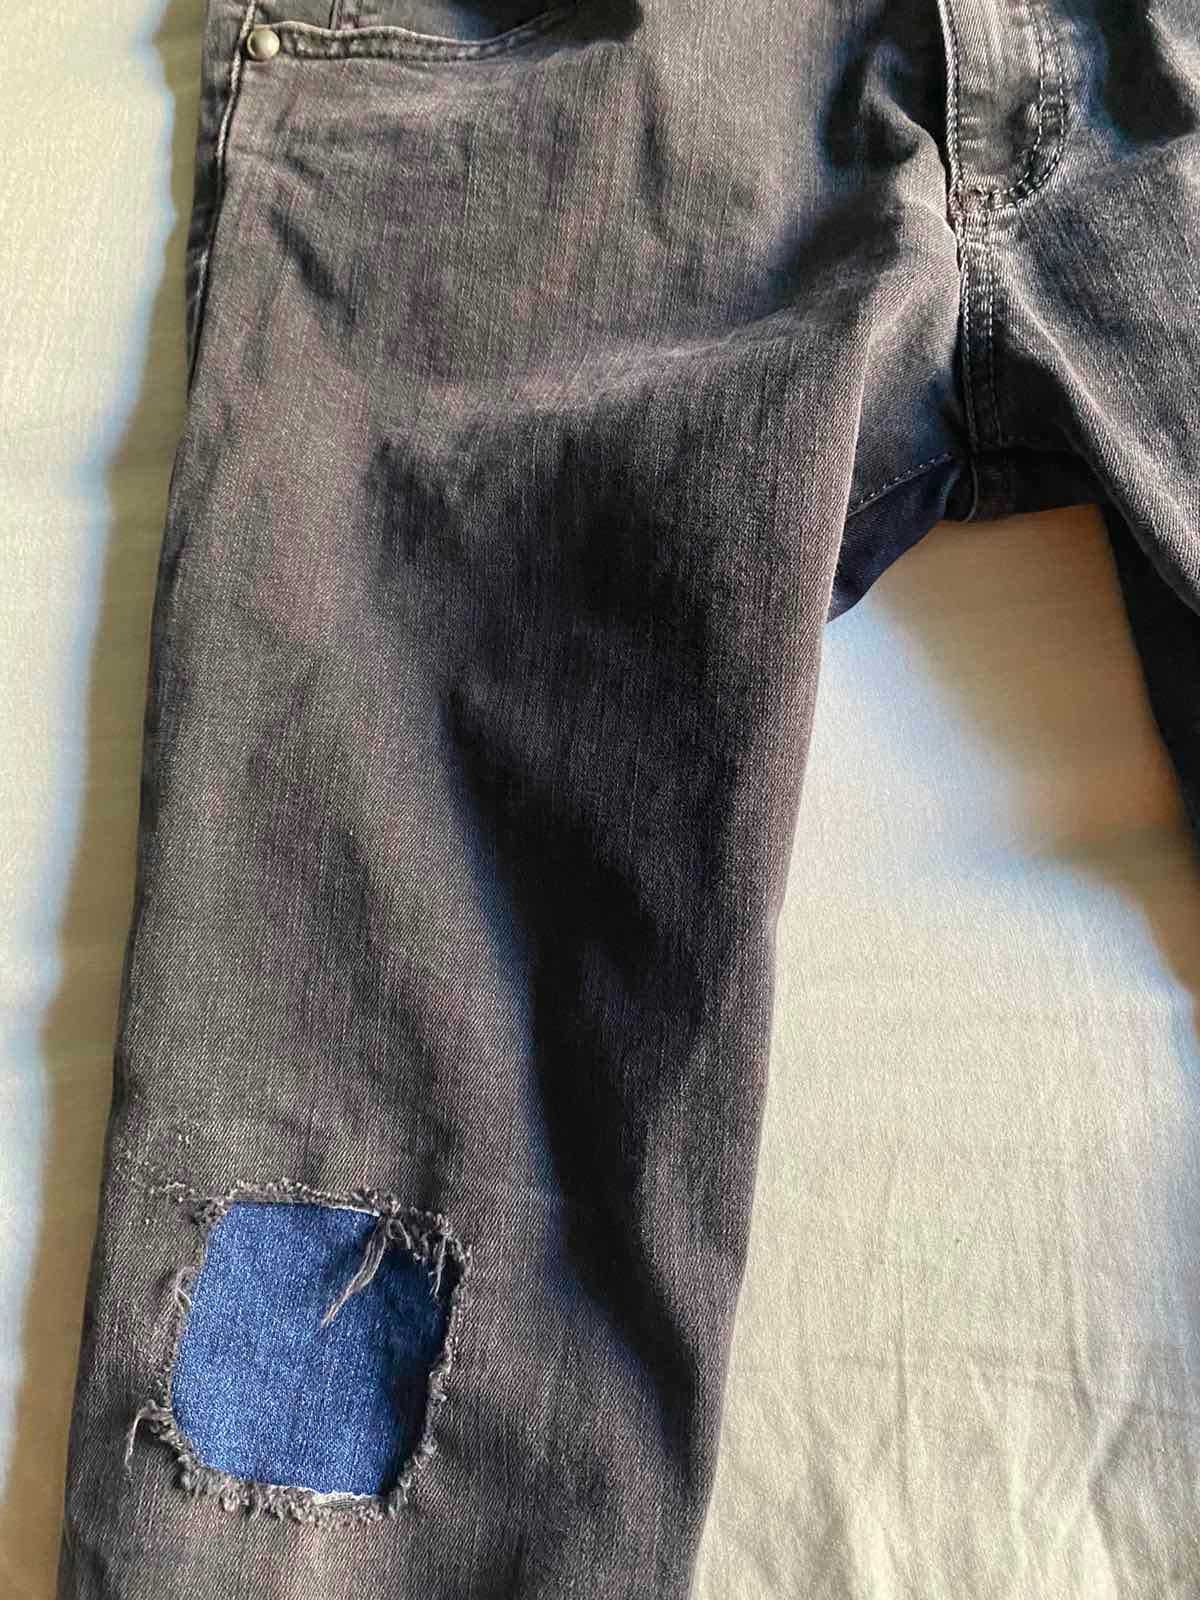 Дамски панталони Fetish, Pause jeans, Alexander Wang, Khujo